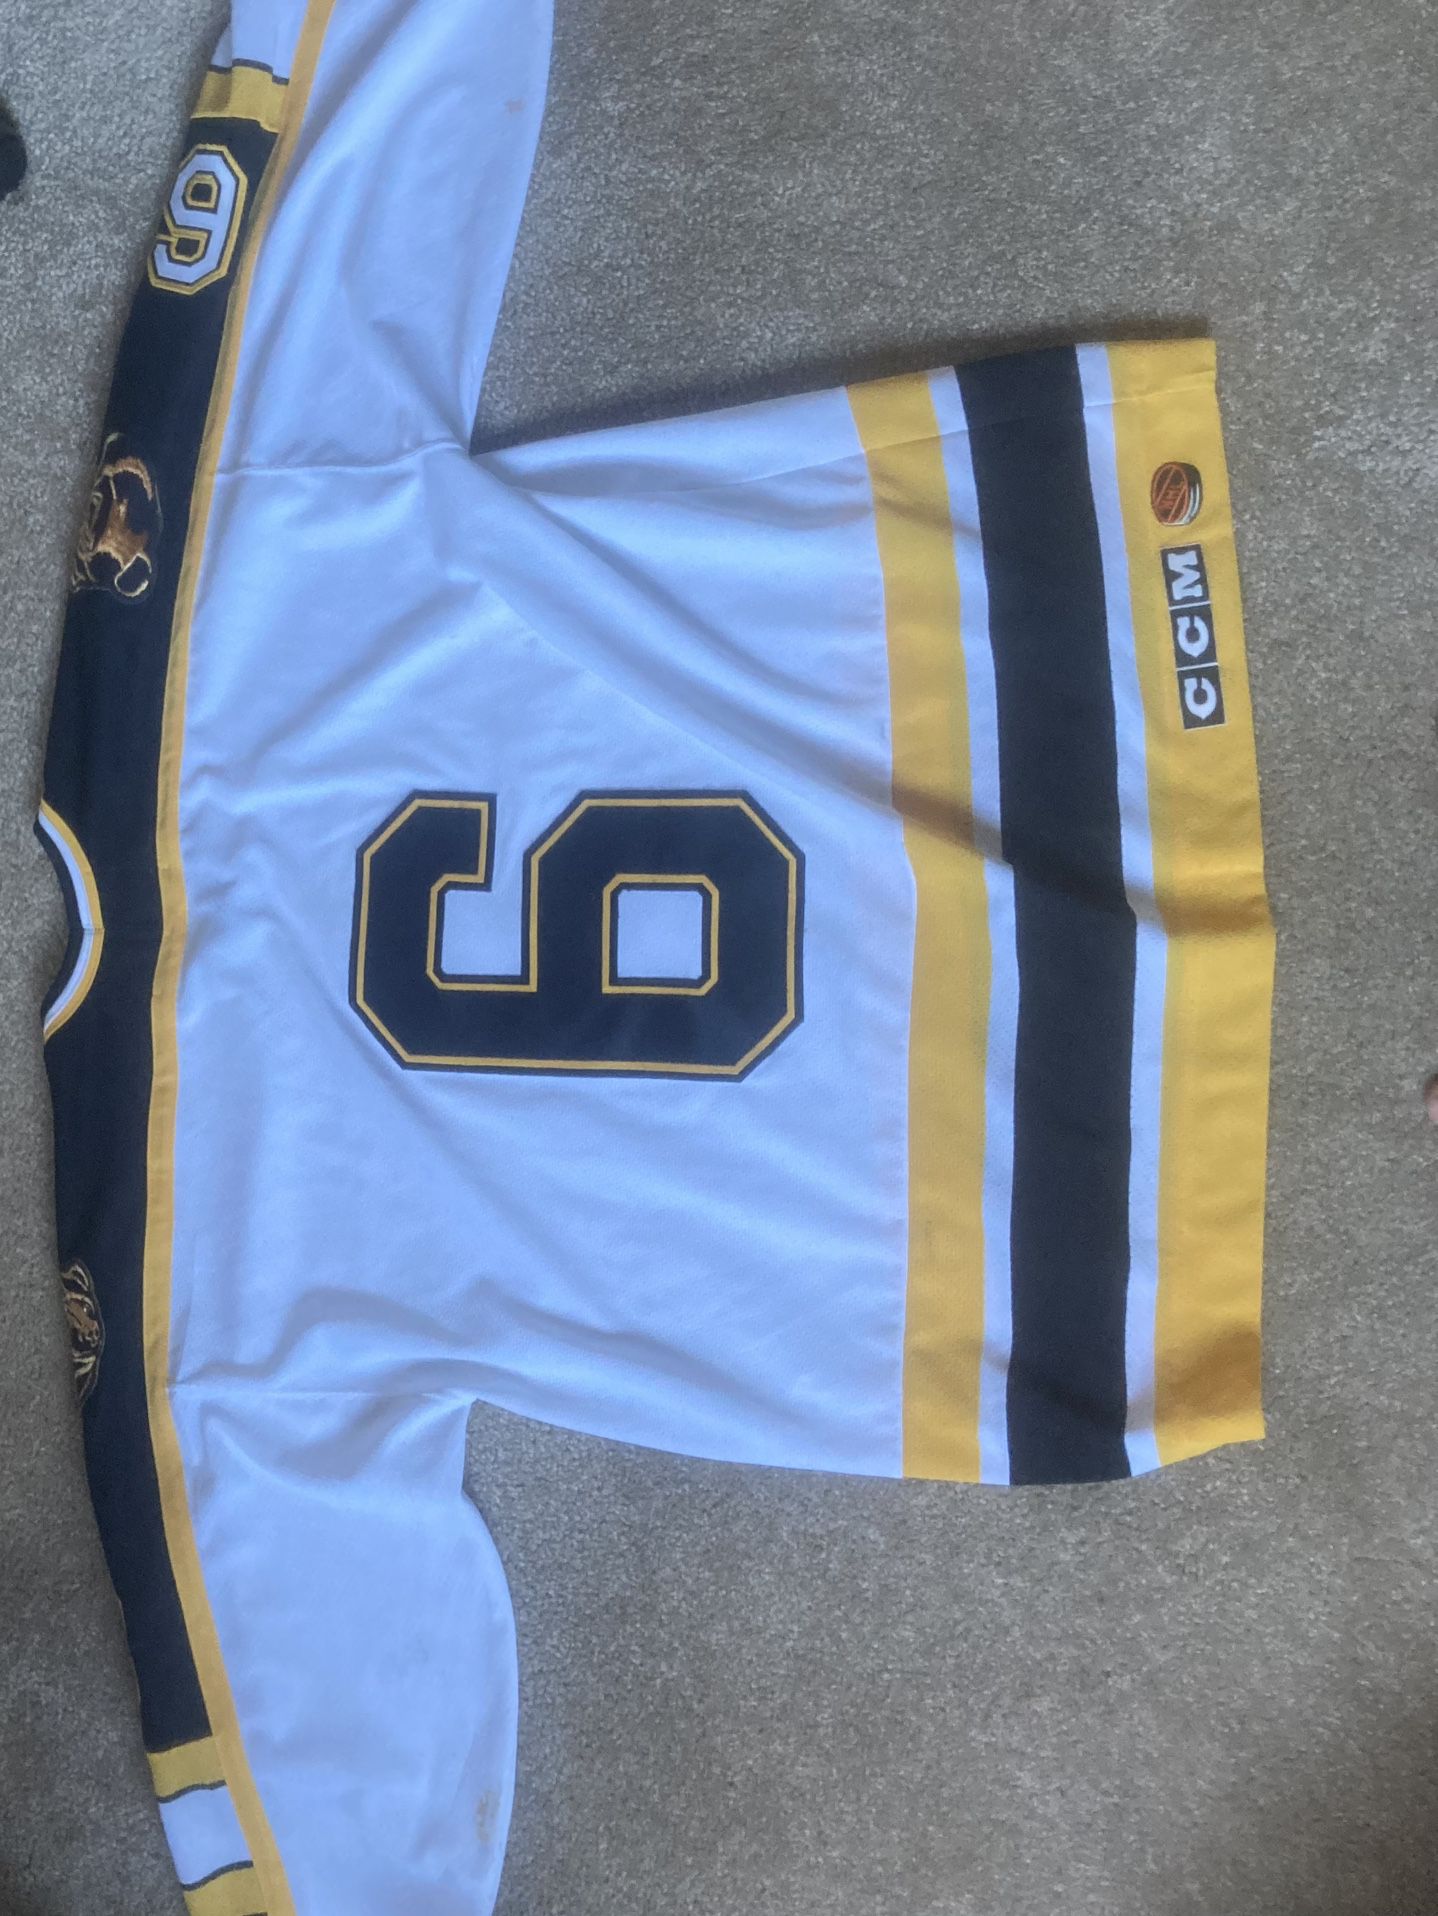 Old School Boston Bruins Hockey Jersey for Sale in Pomona, CA - OfferUp